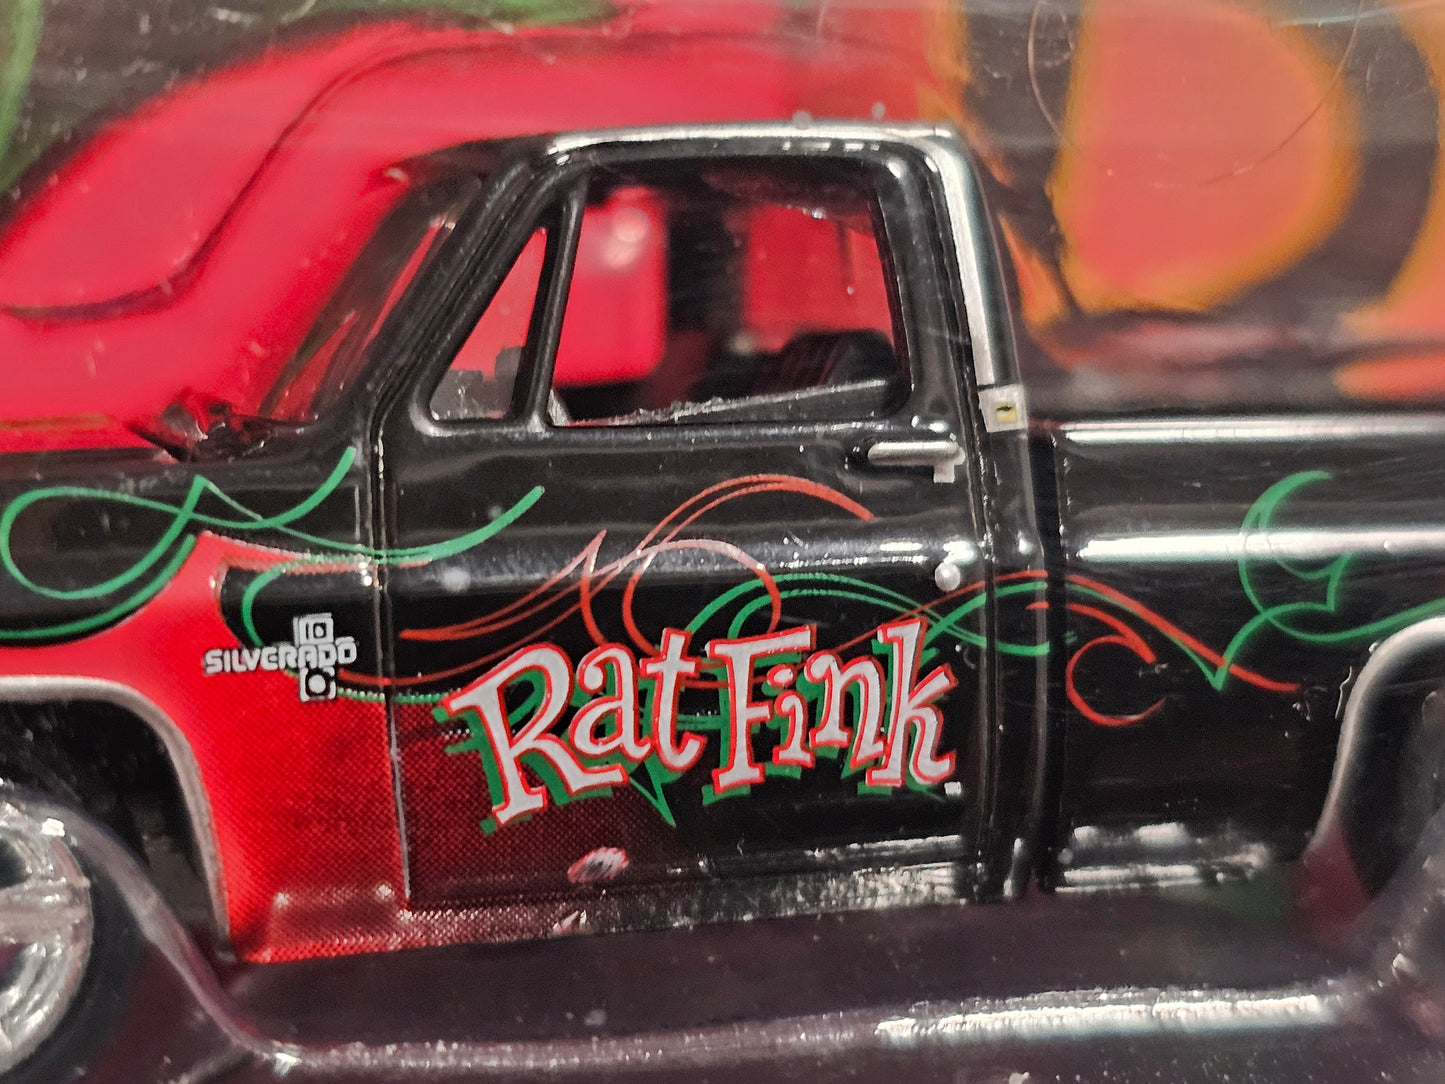 Auto World Rat Fink 1981 Chevy Silverado